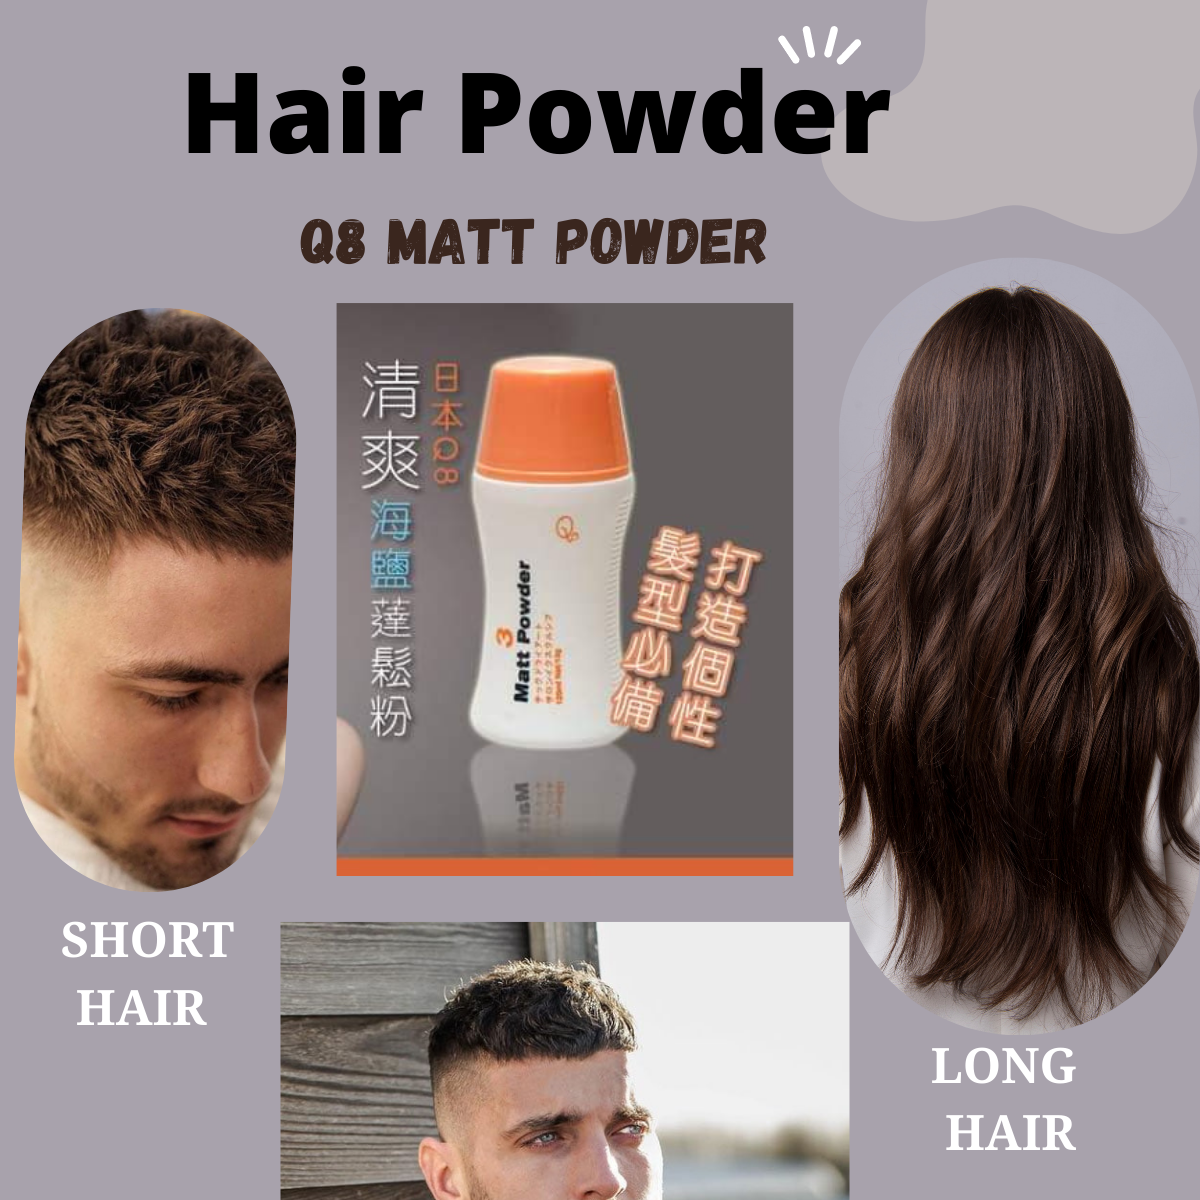 Q8 Matt Powder Mattifying Hair Powder Japan Hair Powder 10g 去油蓬蓬粉 | Lazada